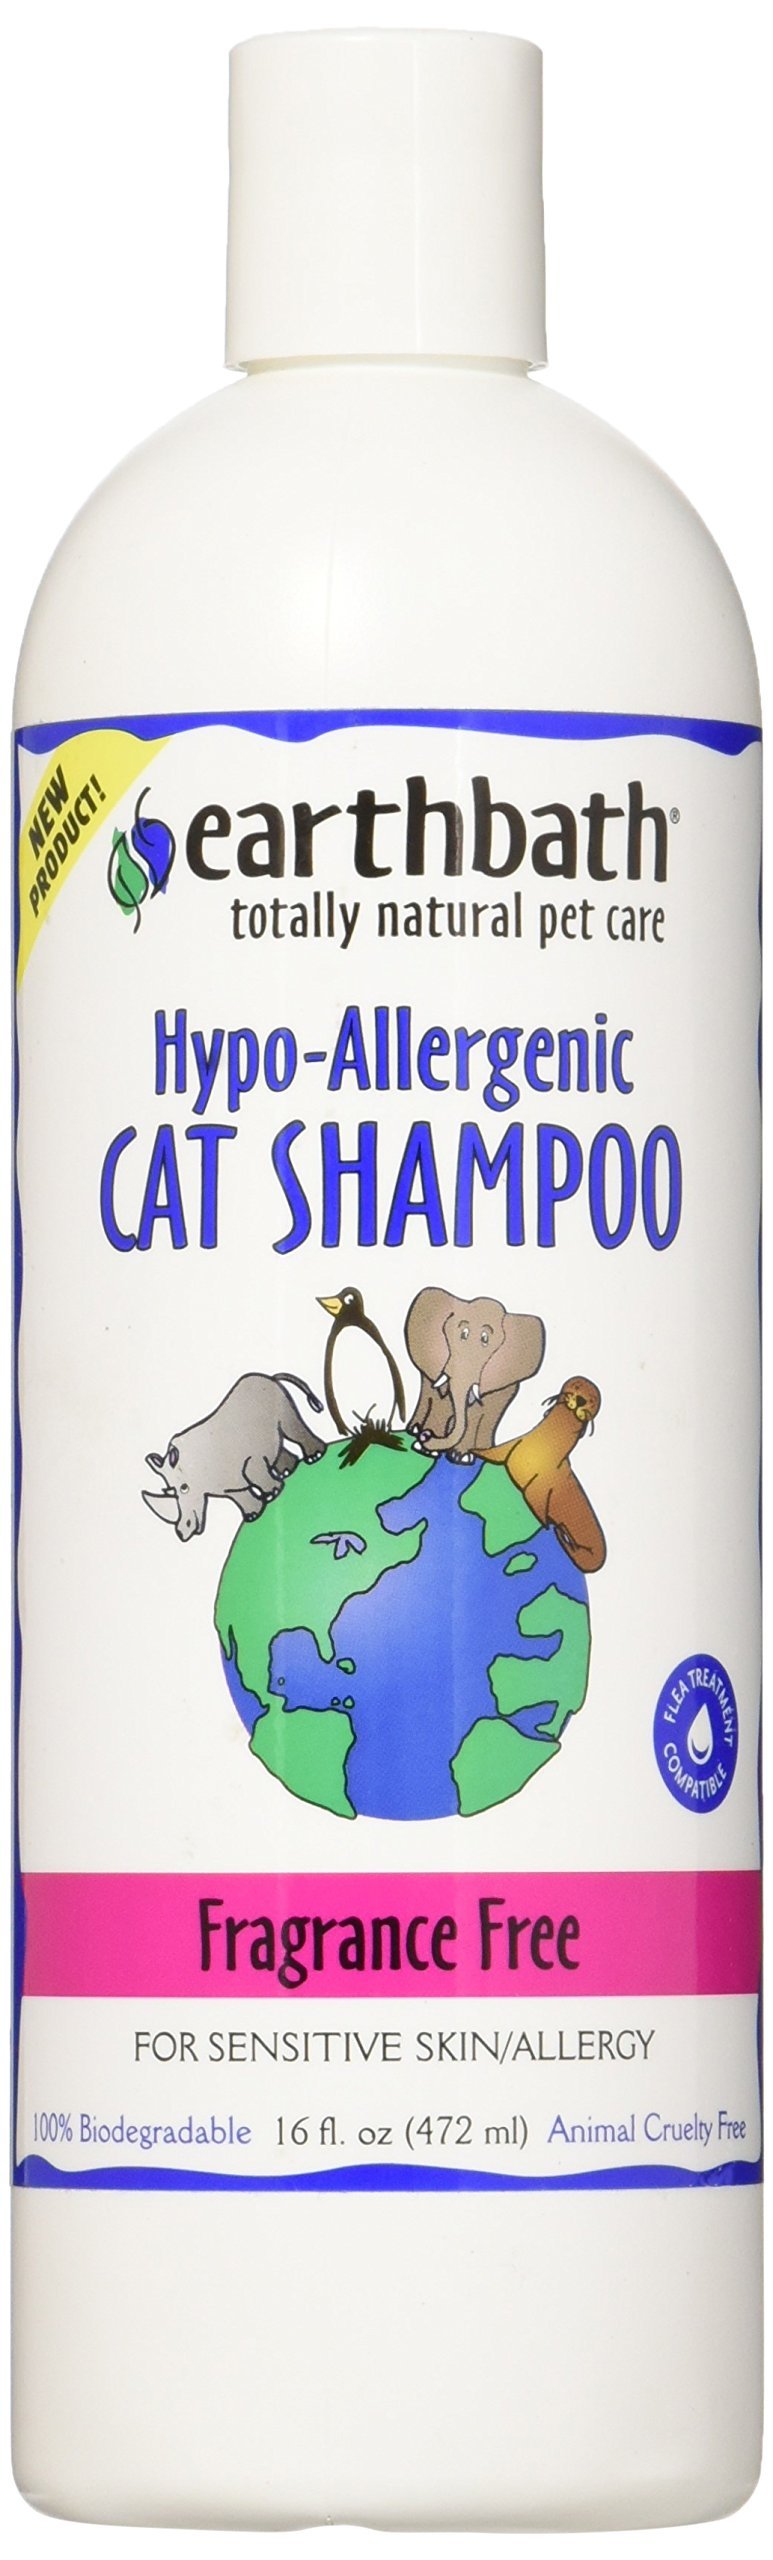 [Australia] - Earthbath Hypo-Allergenic Cat Shampoo, 16 oz 